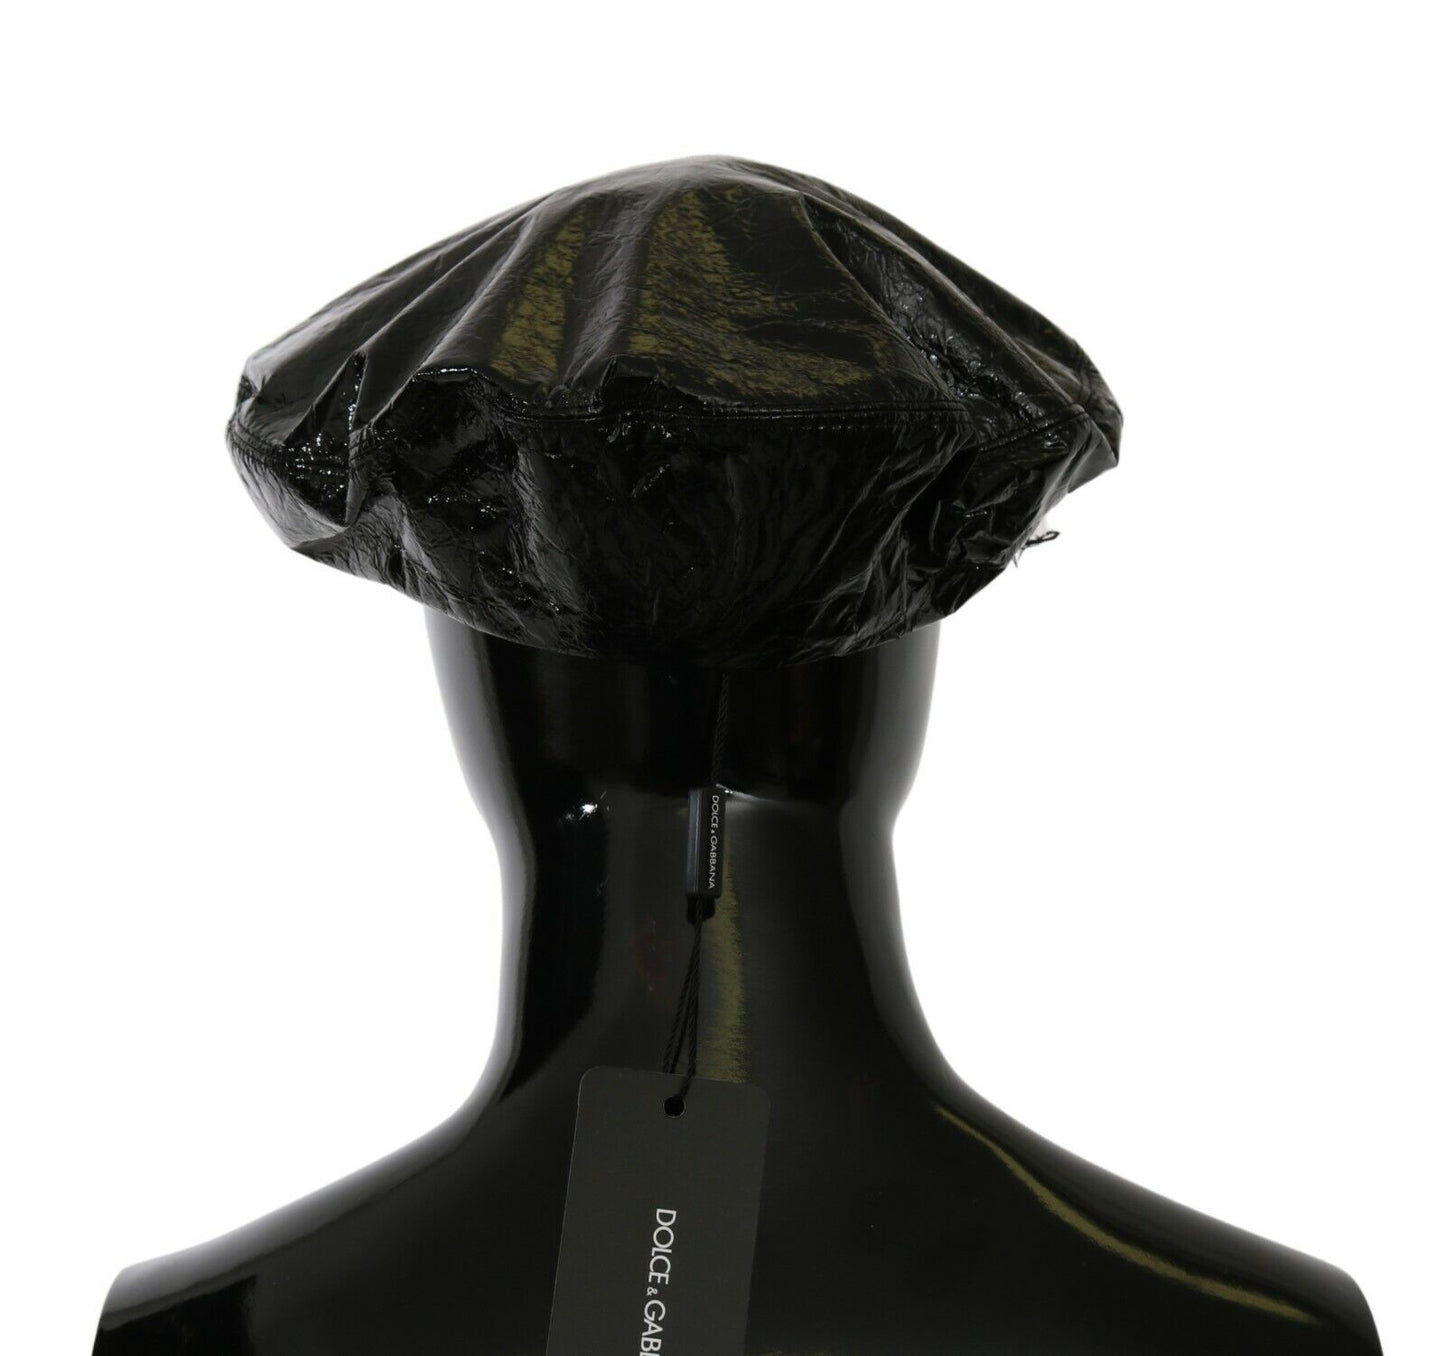 Black Shiny Leather Newsboy Cap Hat